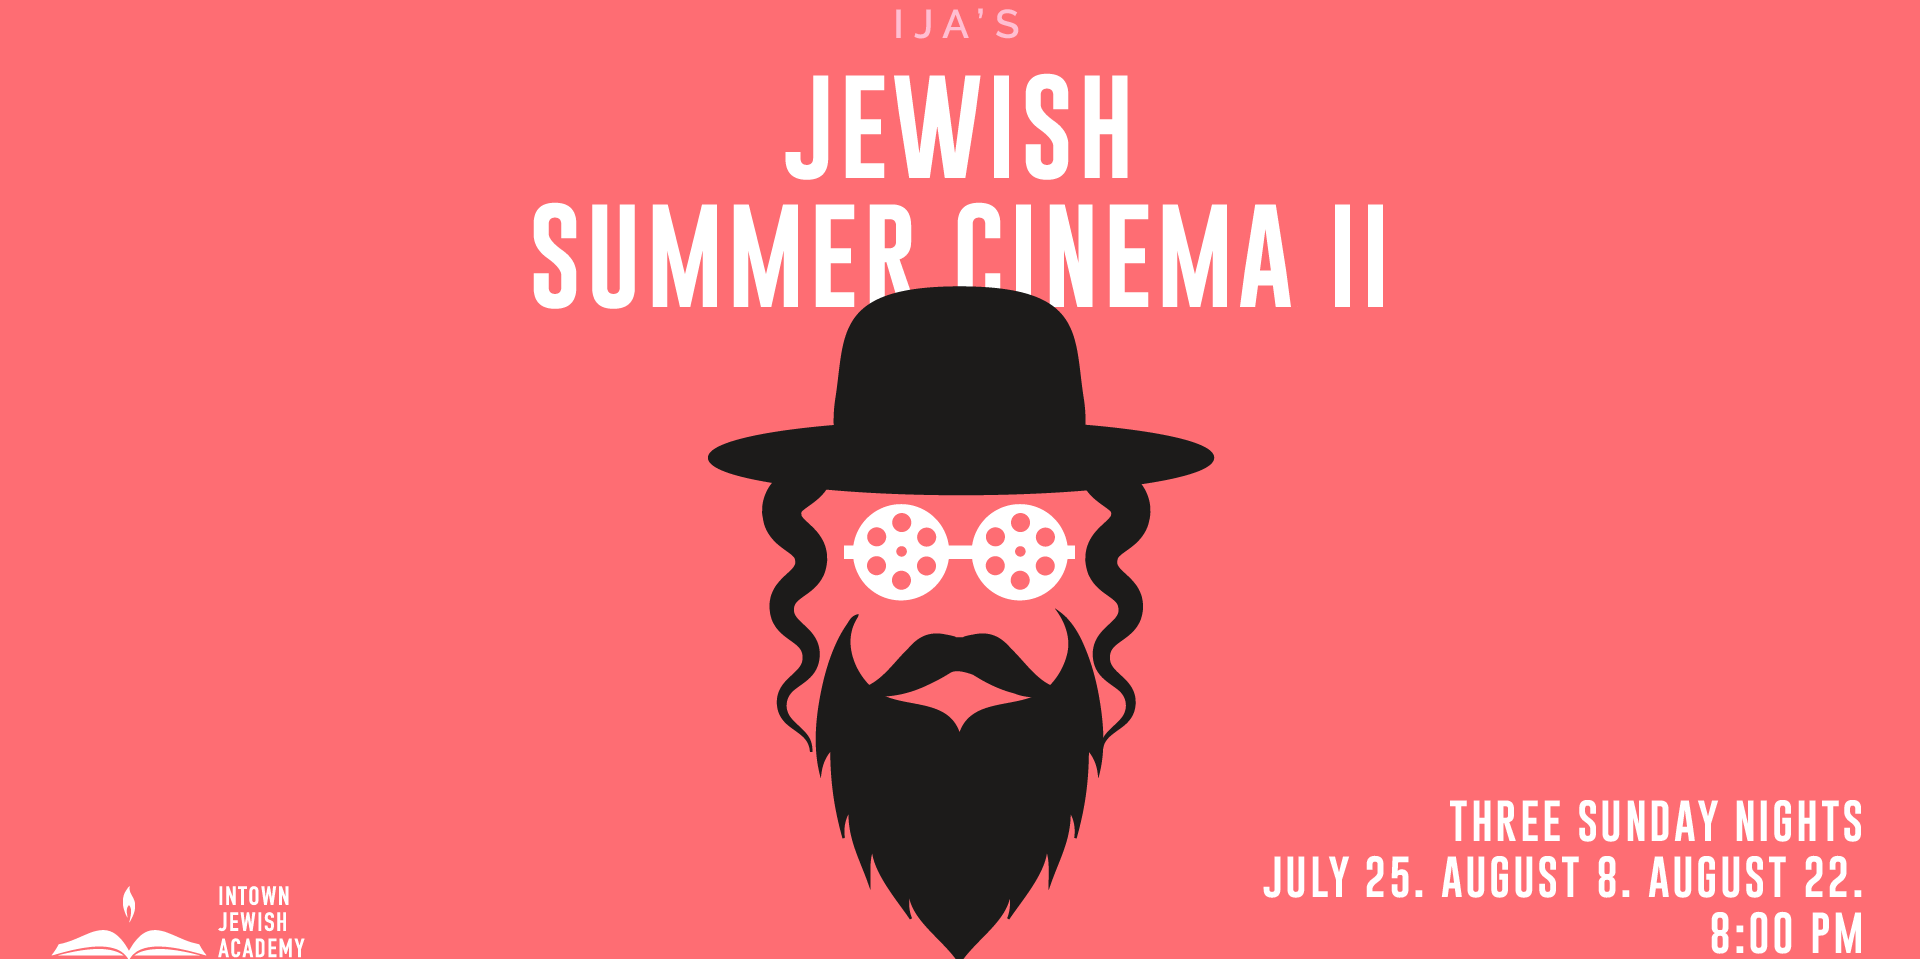 IJA's Jewish Summer Cinema II promotional image